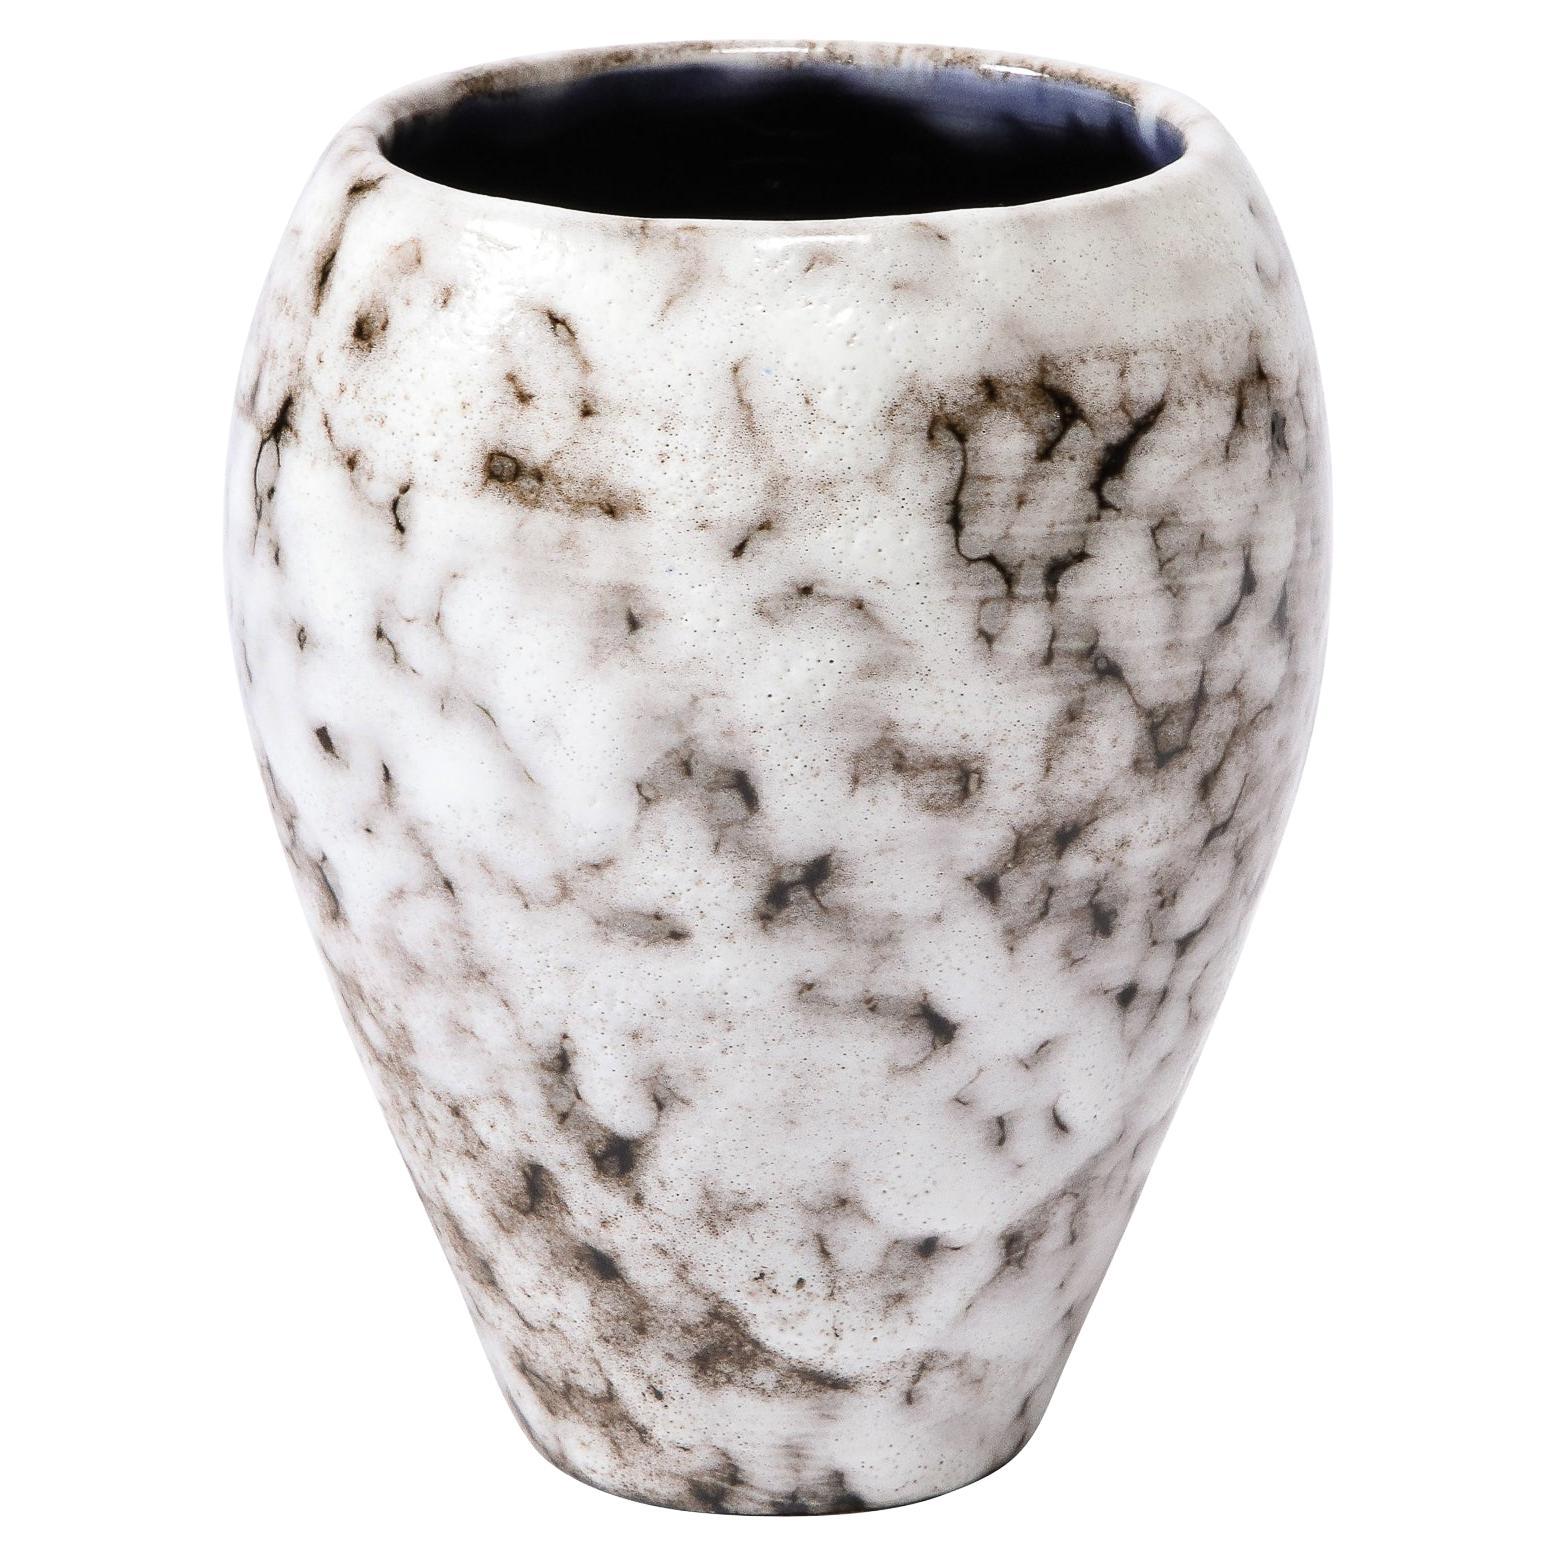 Mid-Century Modernist White and Earth Toned Ceramic Vase